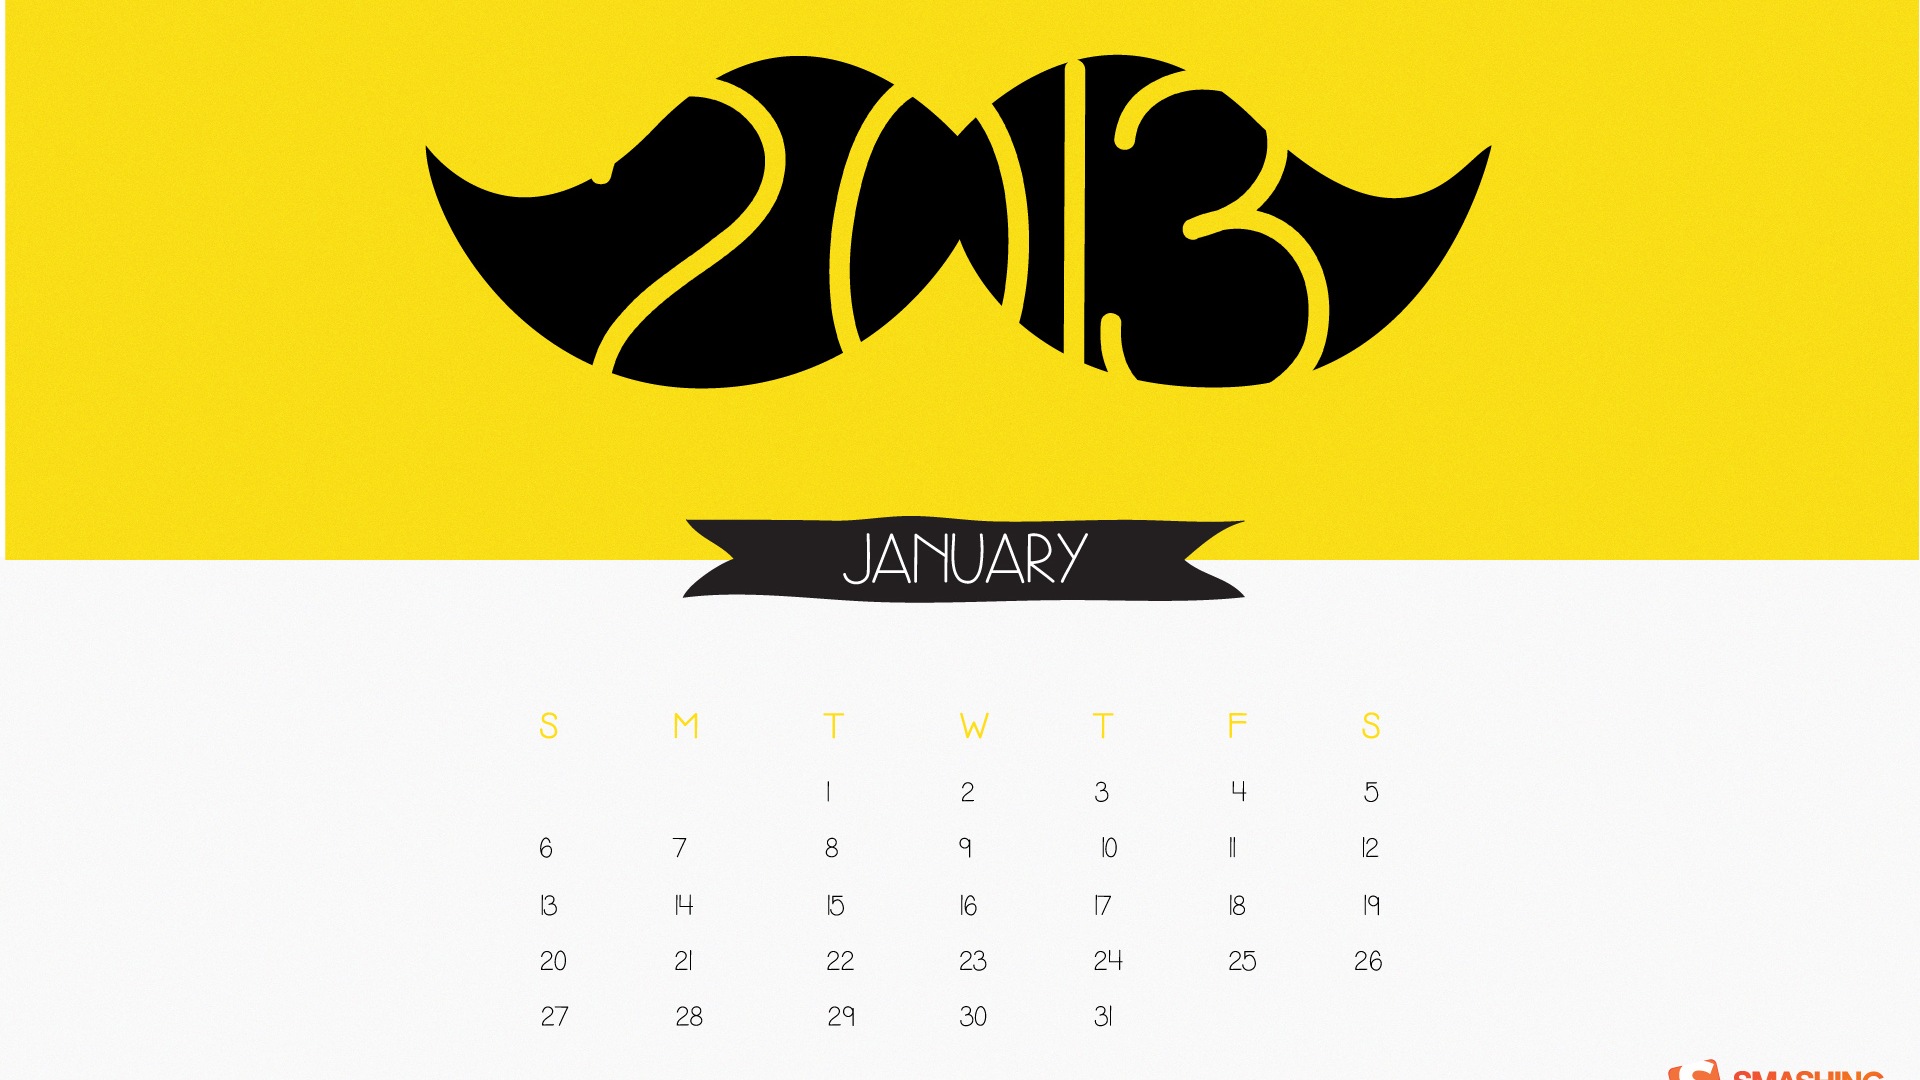 January 2013 Calendar wallpaper (1) #20 - 1920x1080